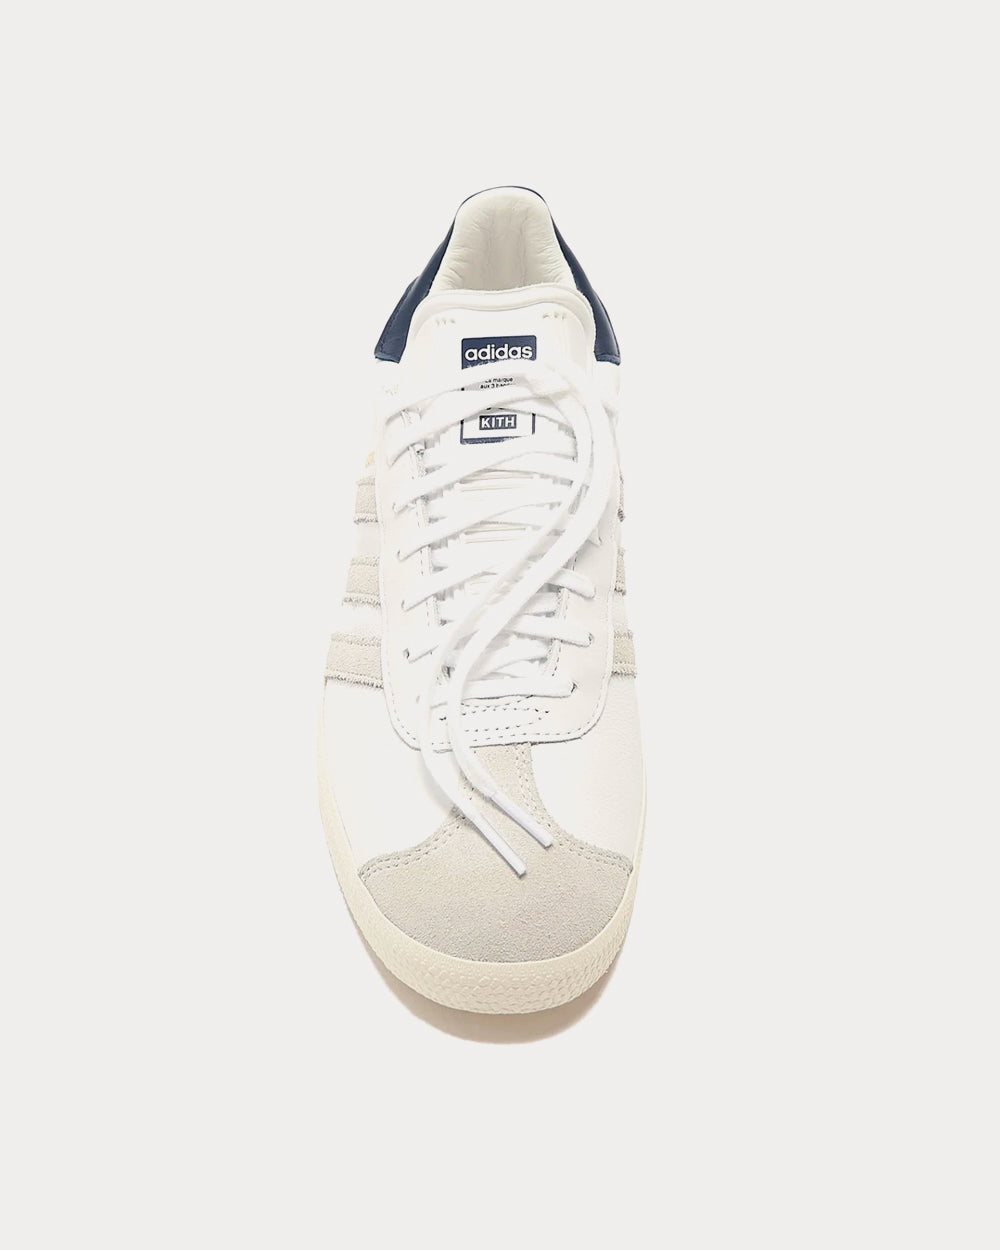 Adidas x Kith - Classics Program Gazelle White / Collegiate Blue / Gold Low Top Sneakers